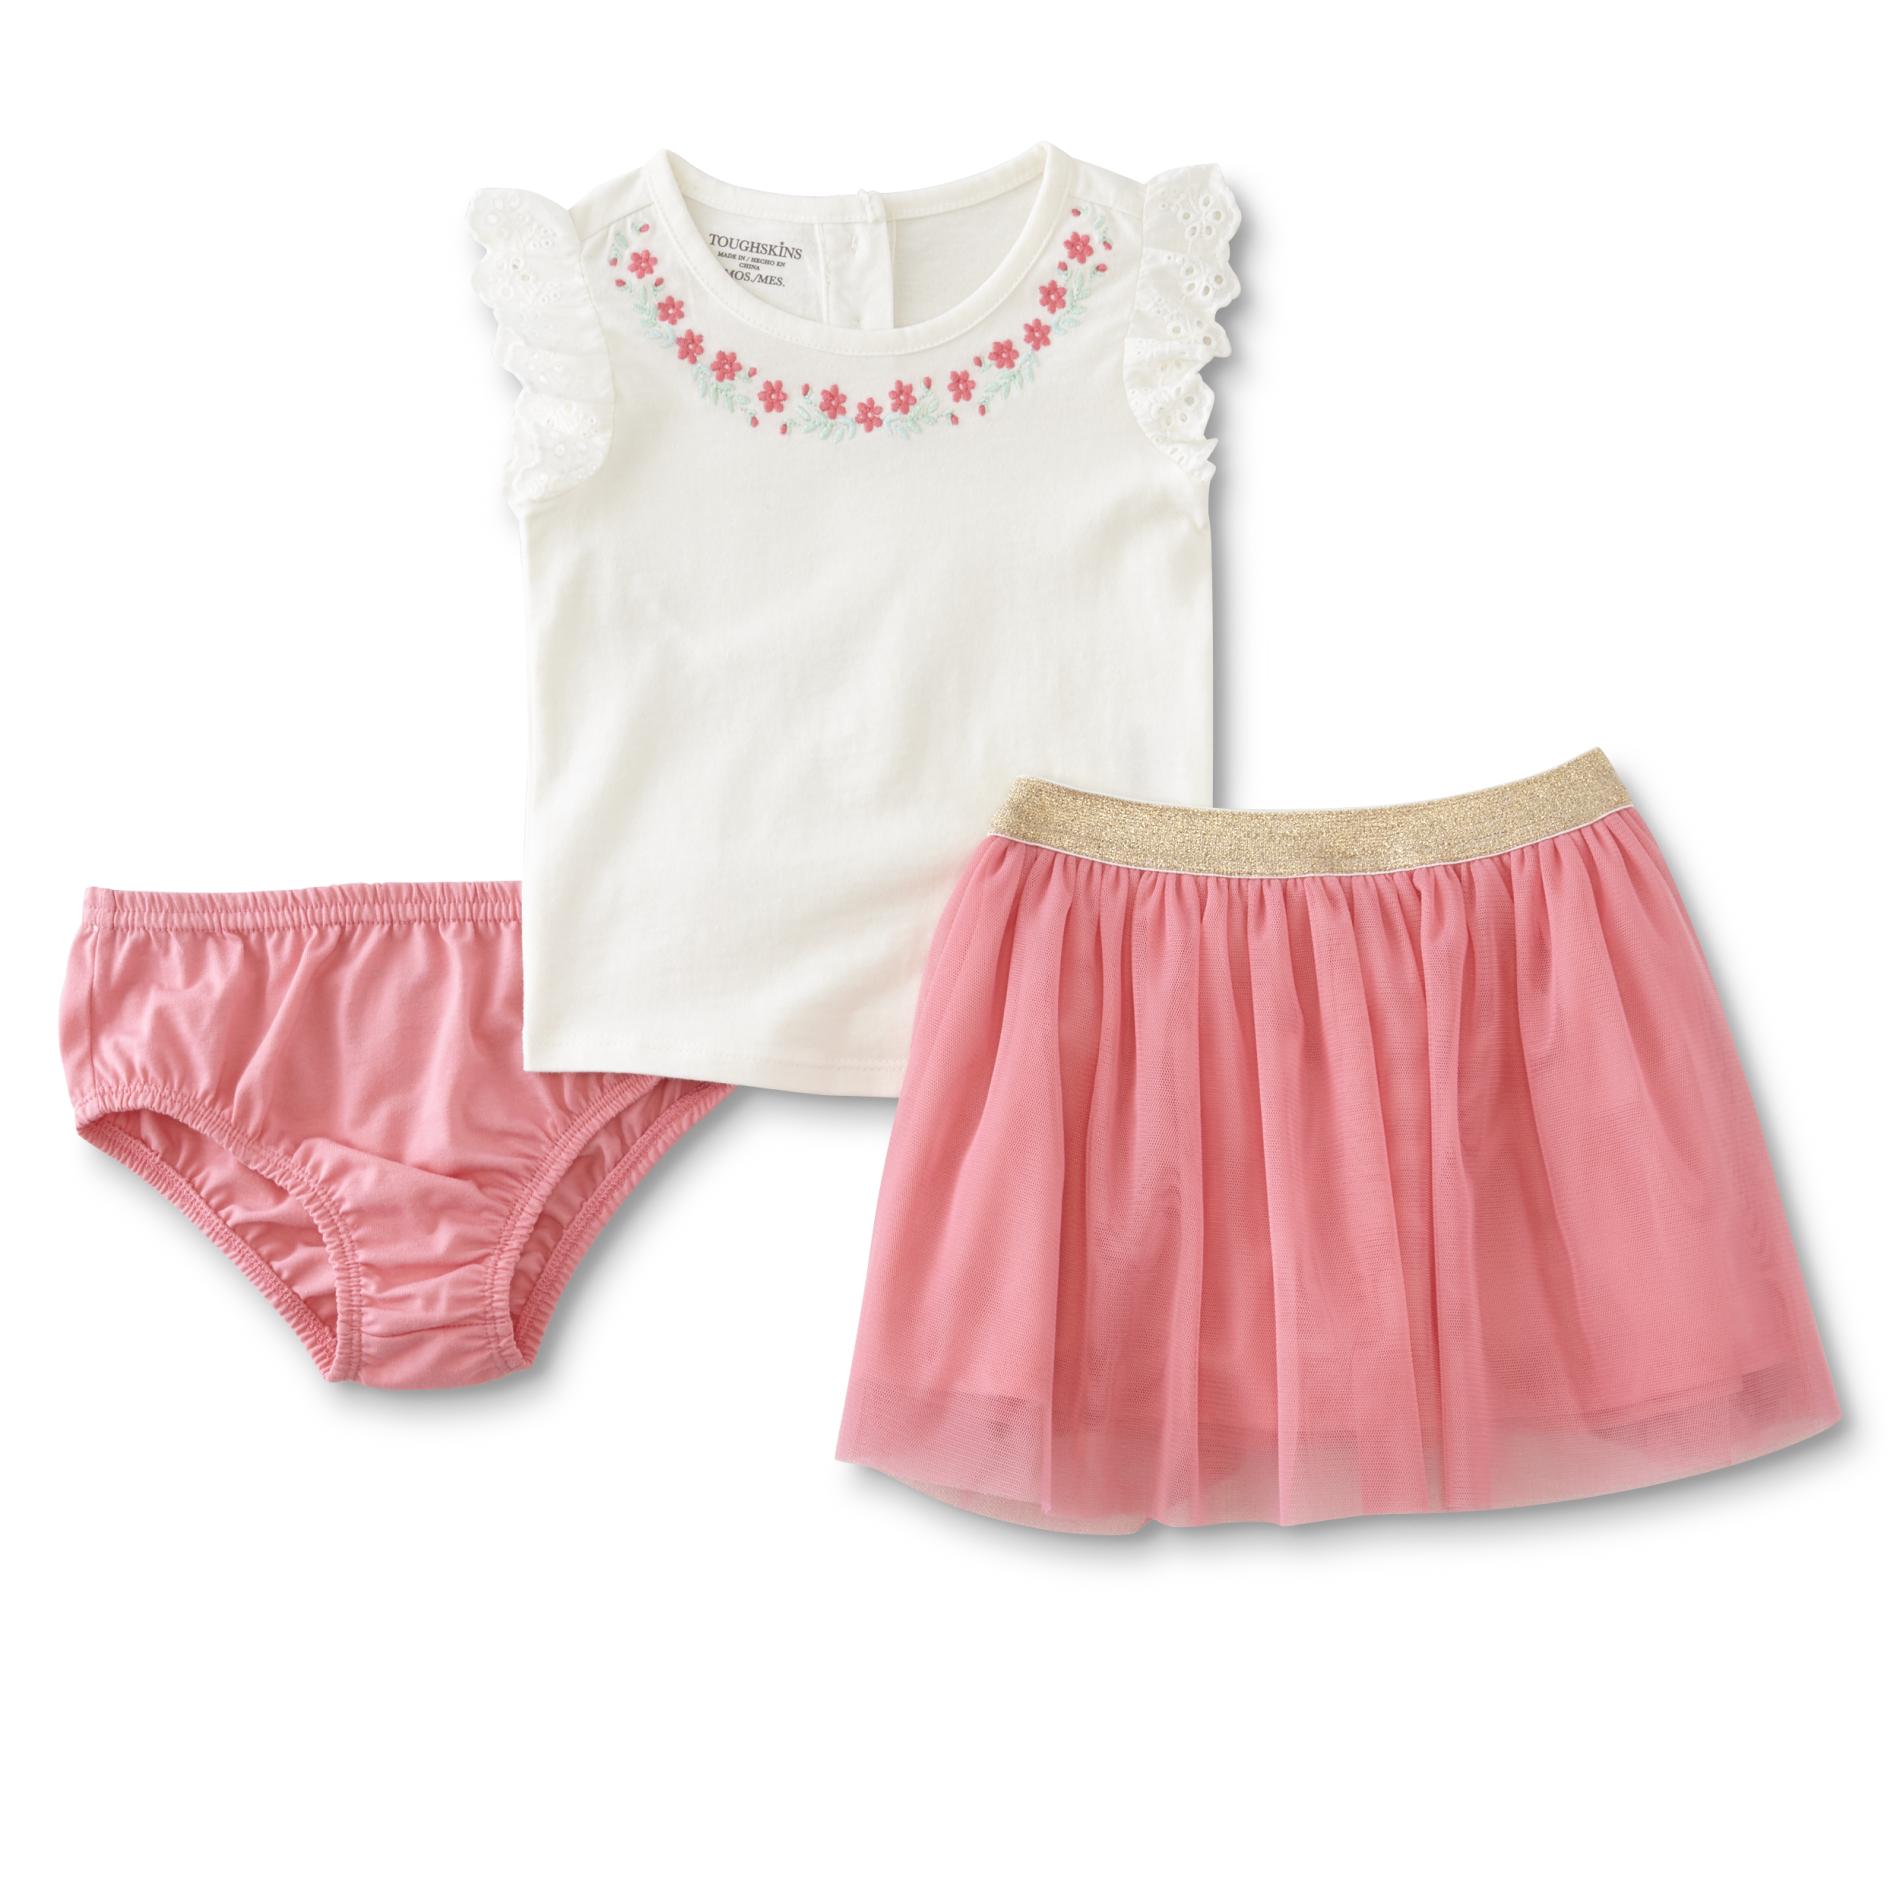 Toughskins Infant Girls' T-Shirt, Skirt & Diaper Cover - Floral